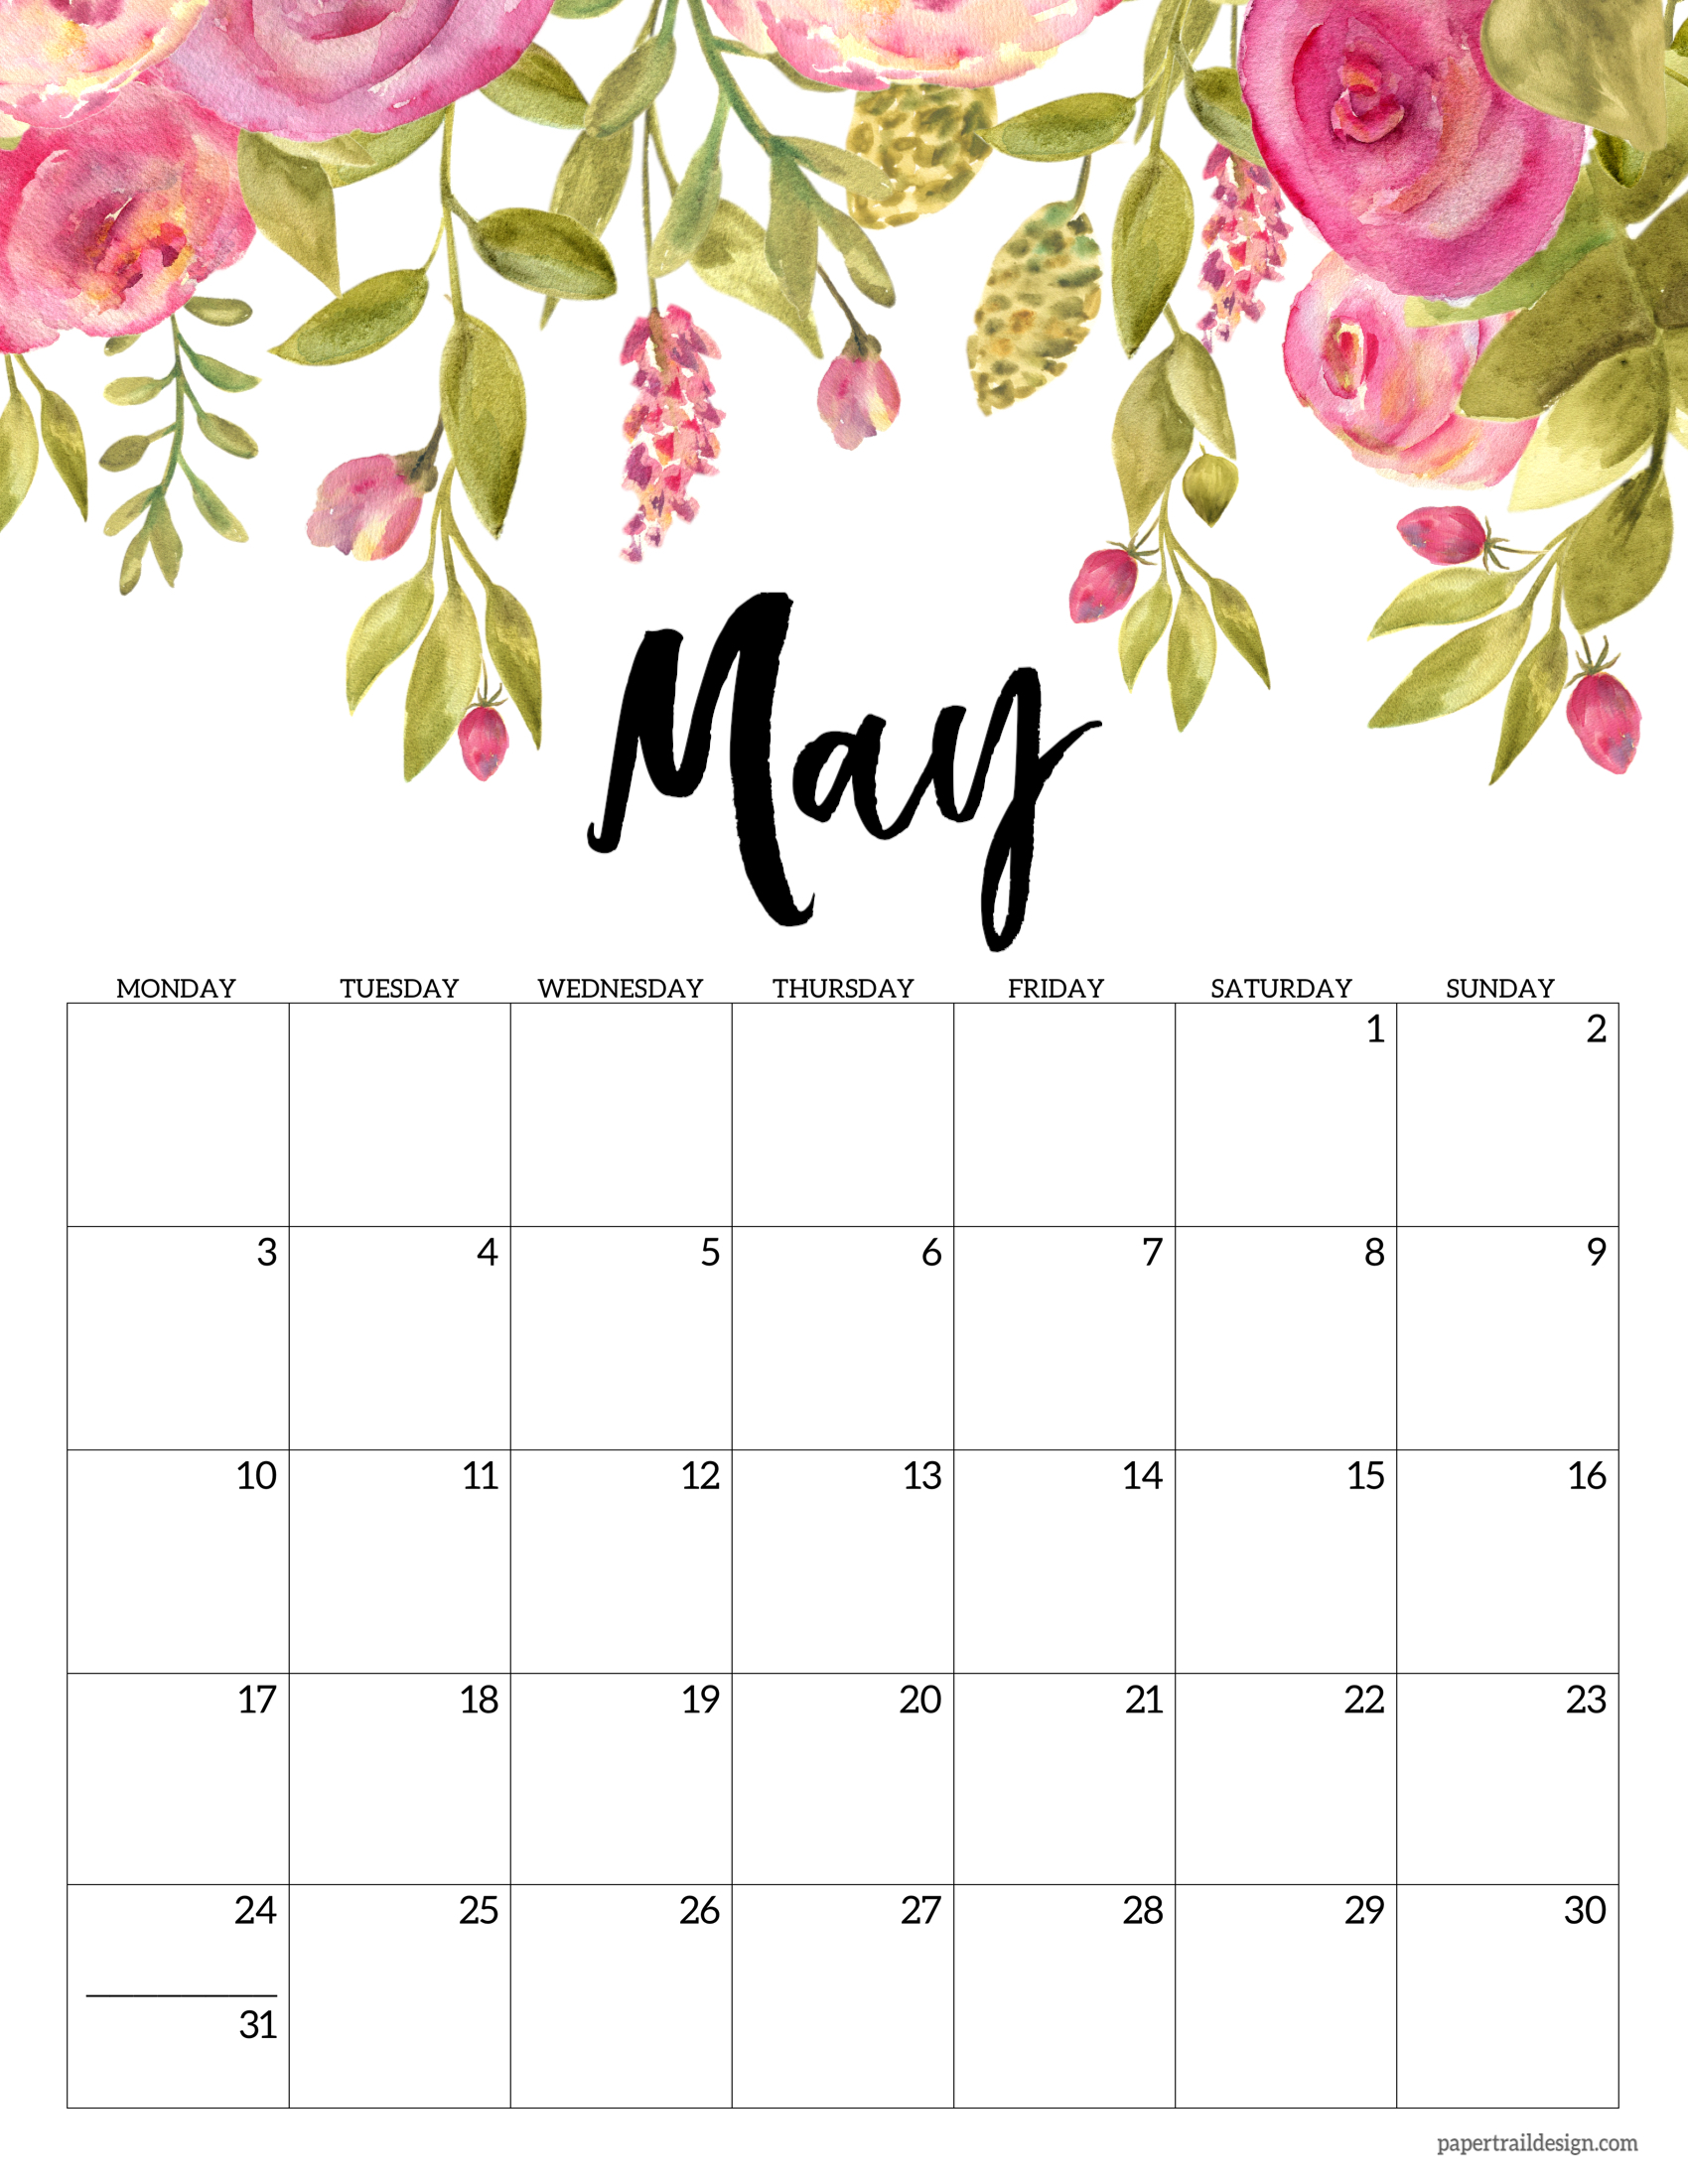 free-printable-2021-floral-calendar-monday-start-paper-trail-design